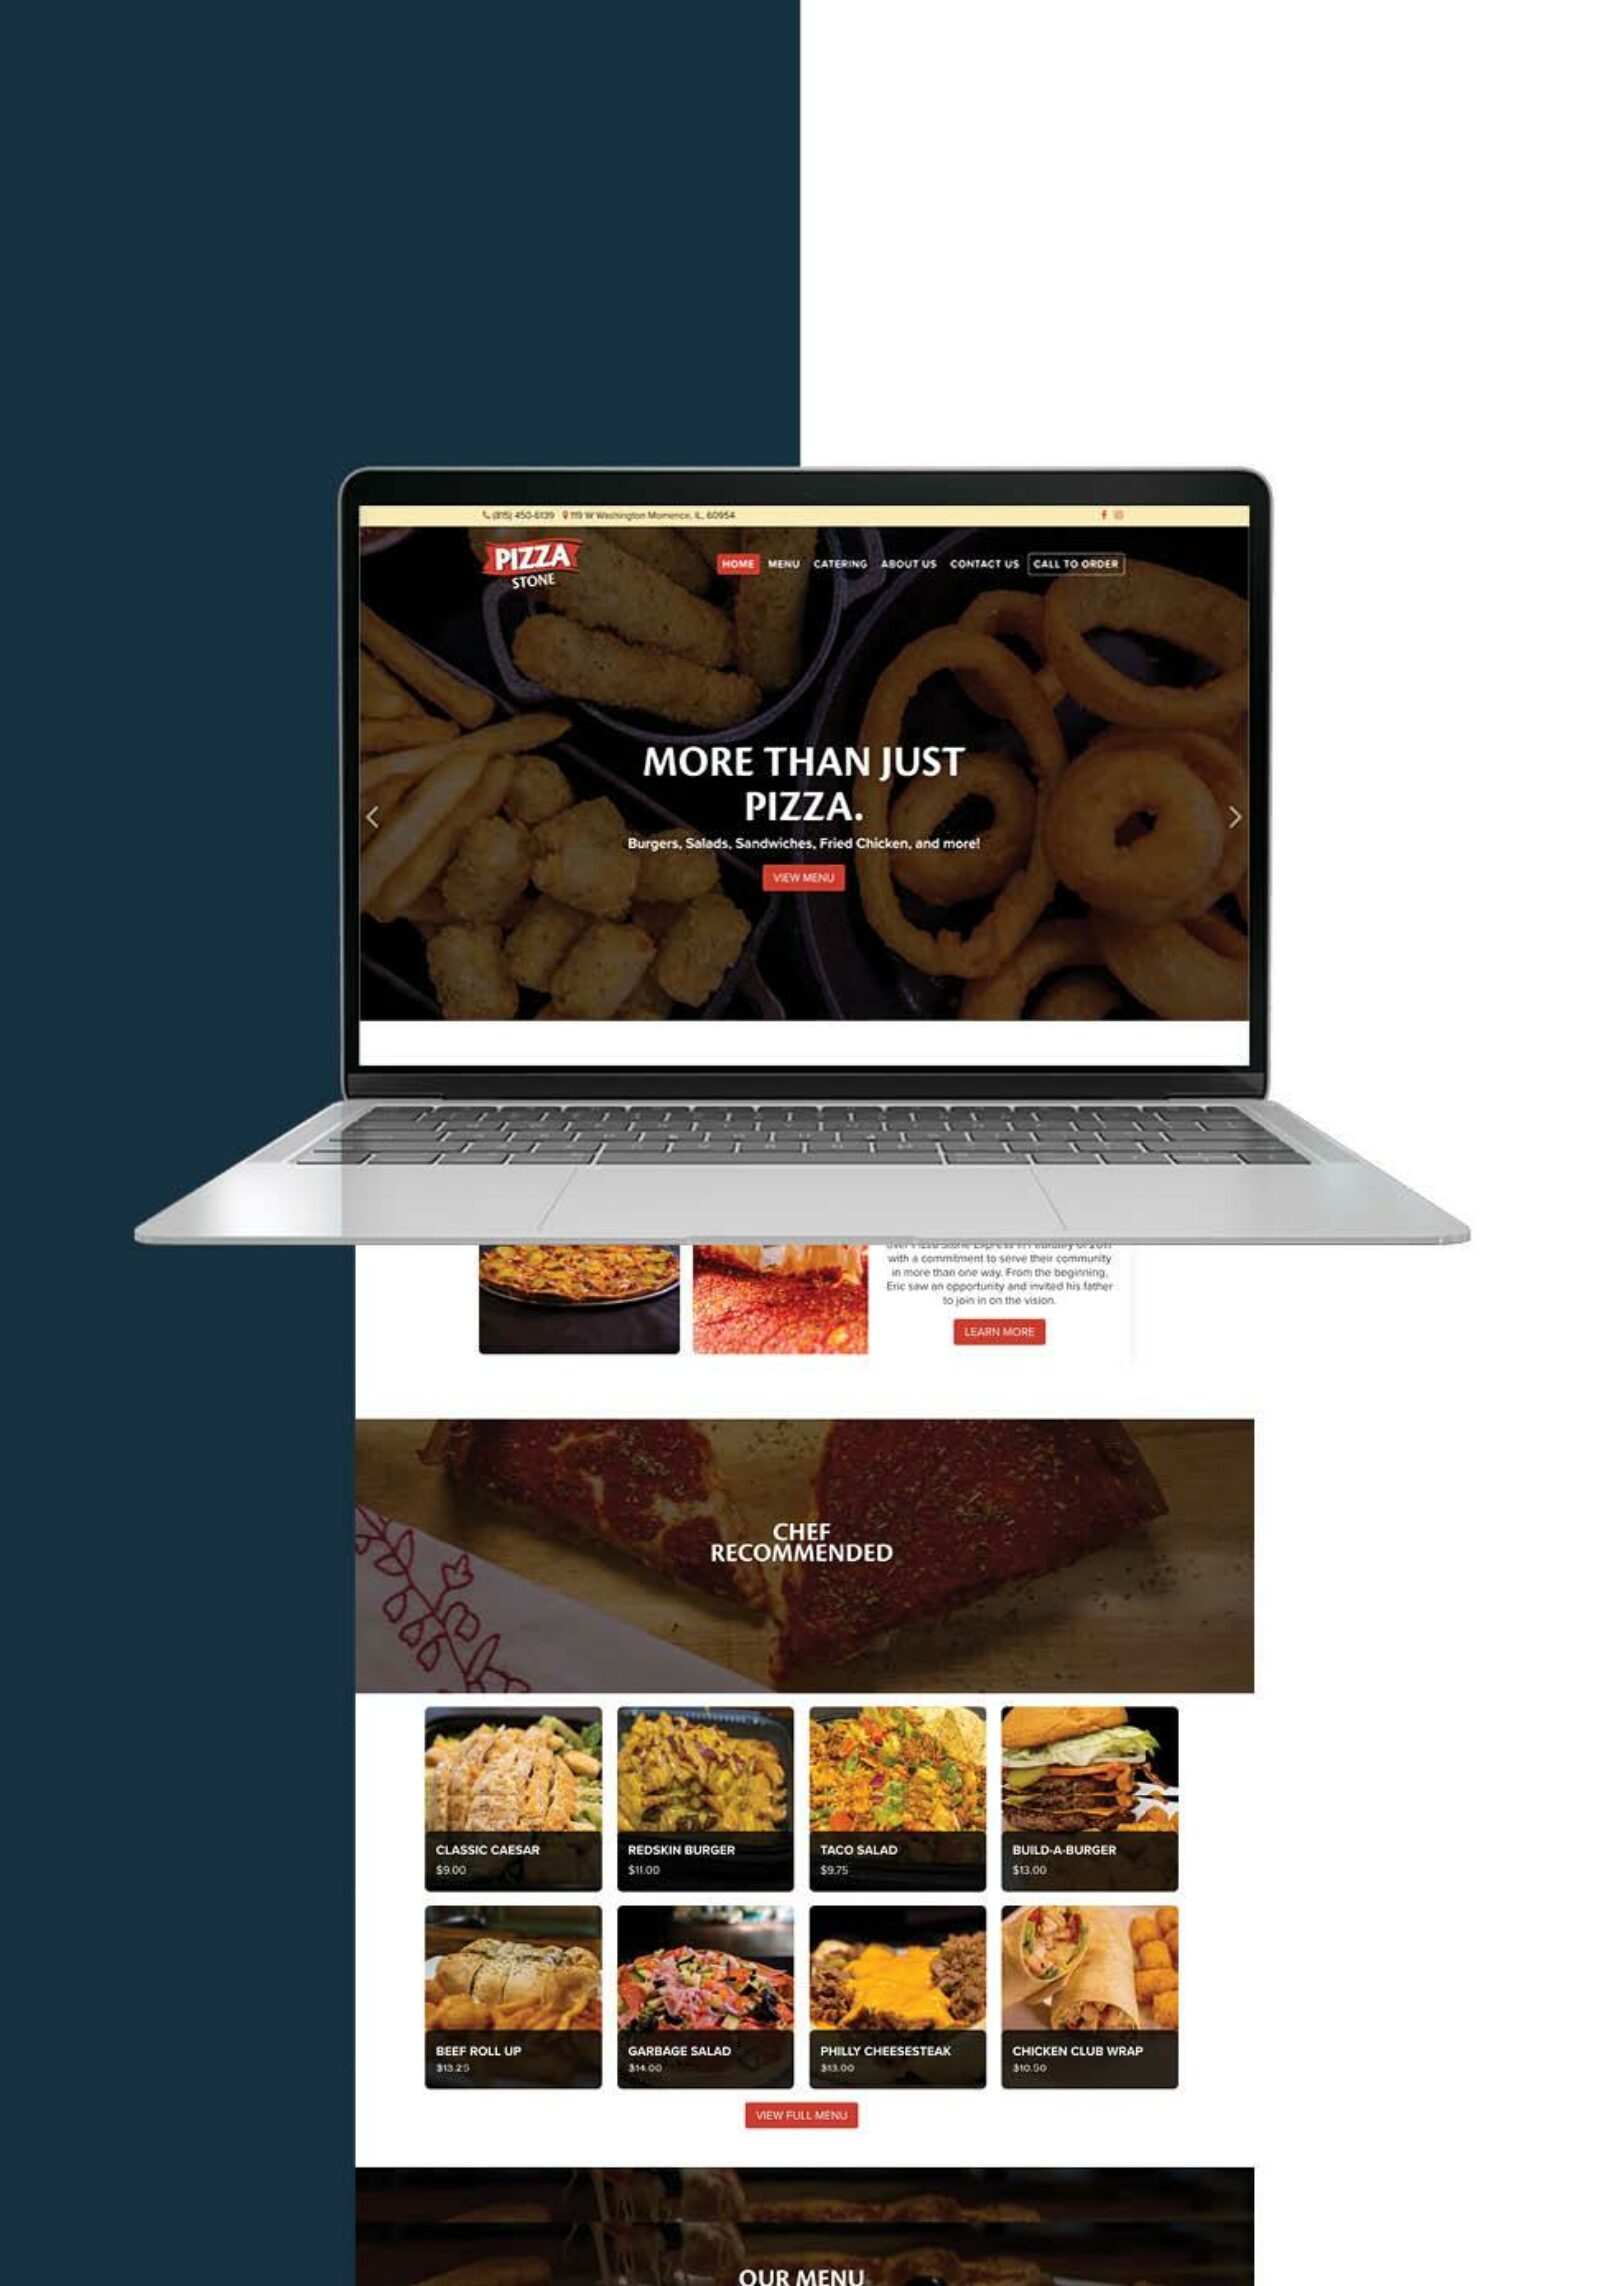 Pizza Stone Express Website